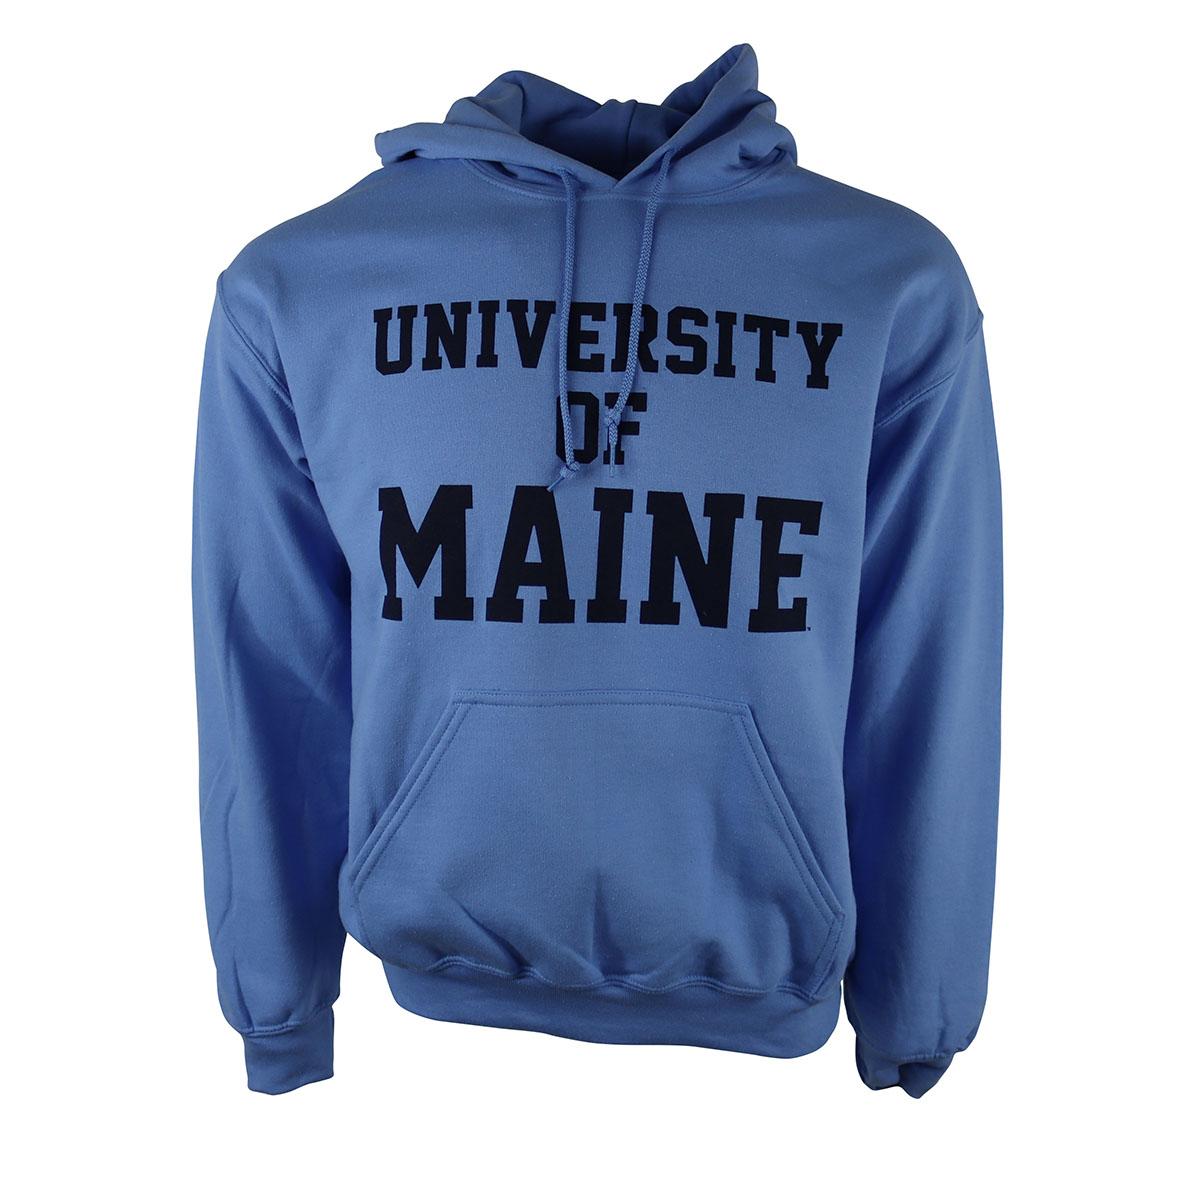 W Republic Apparel UMaine University of Maine Freshman Pullover Sweatshirt Hoodie Navy 